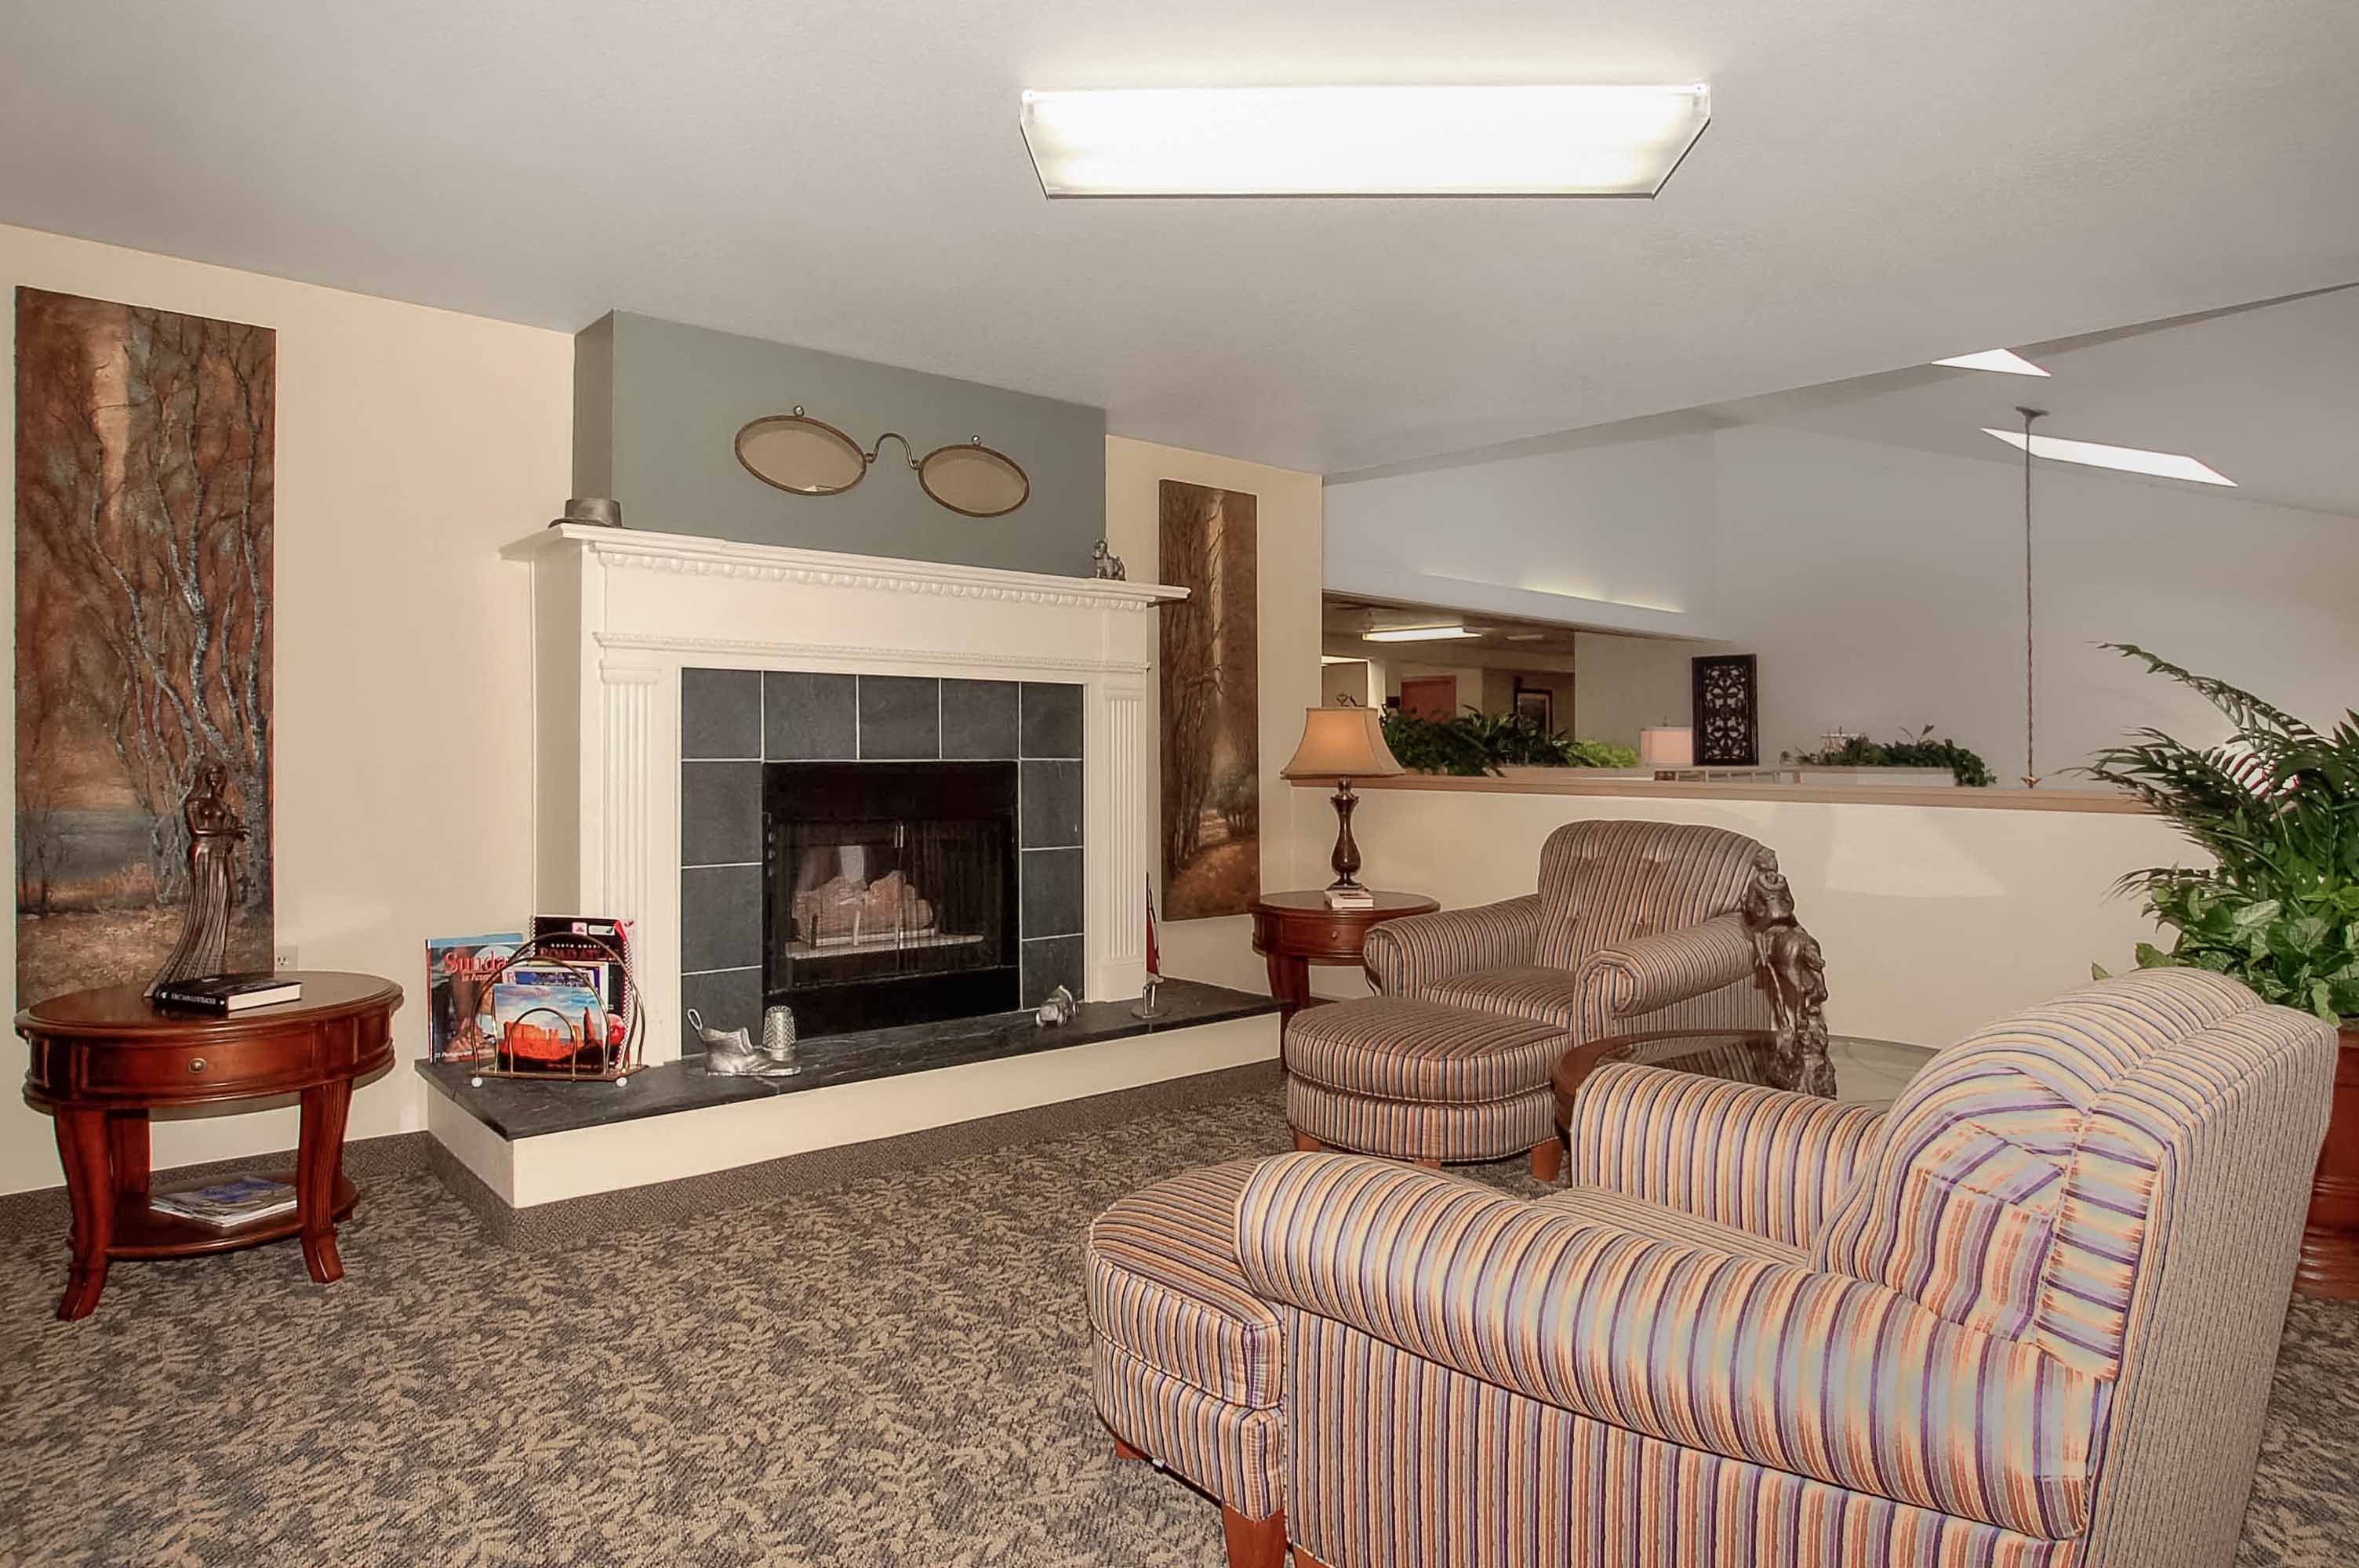 Interior view of Parkwood Estates senior living community featuring elegant decor, fireplace, and furniture.